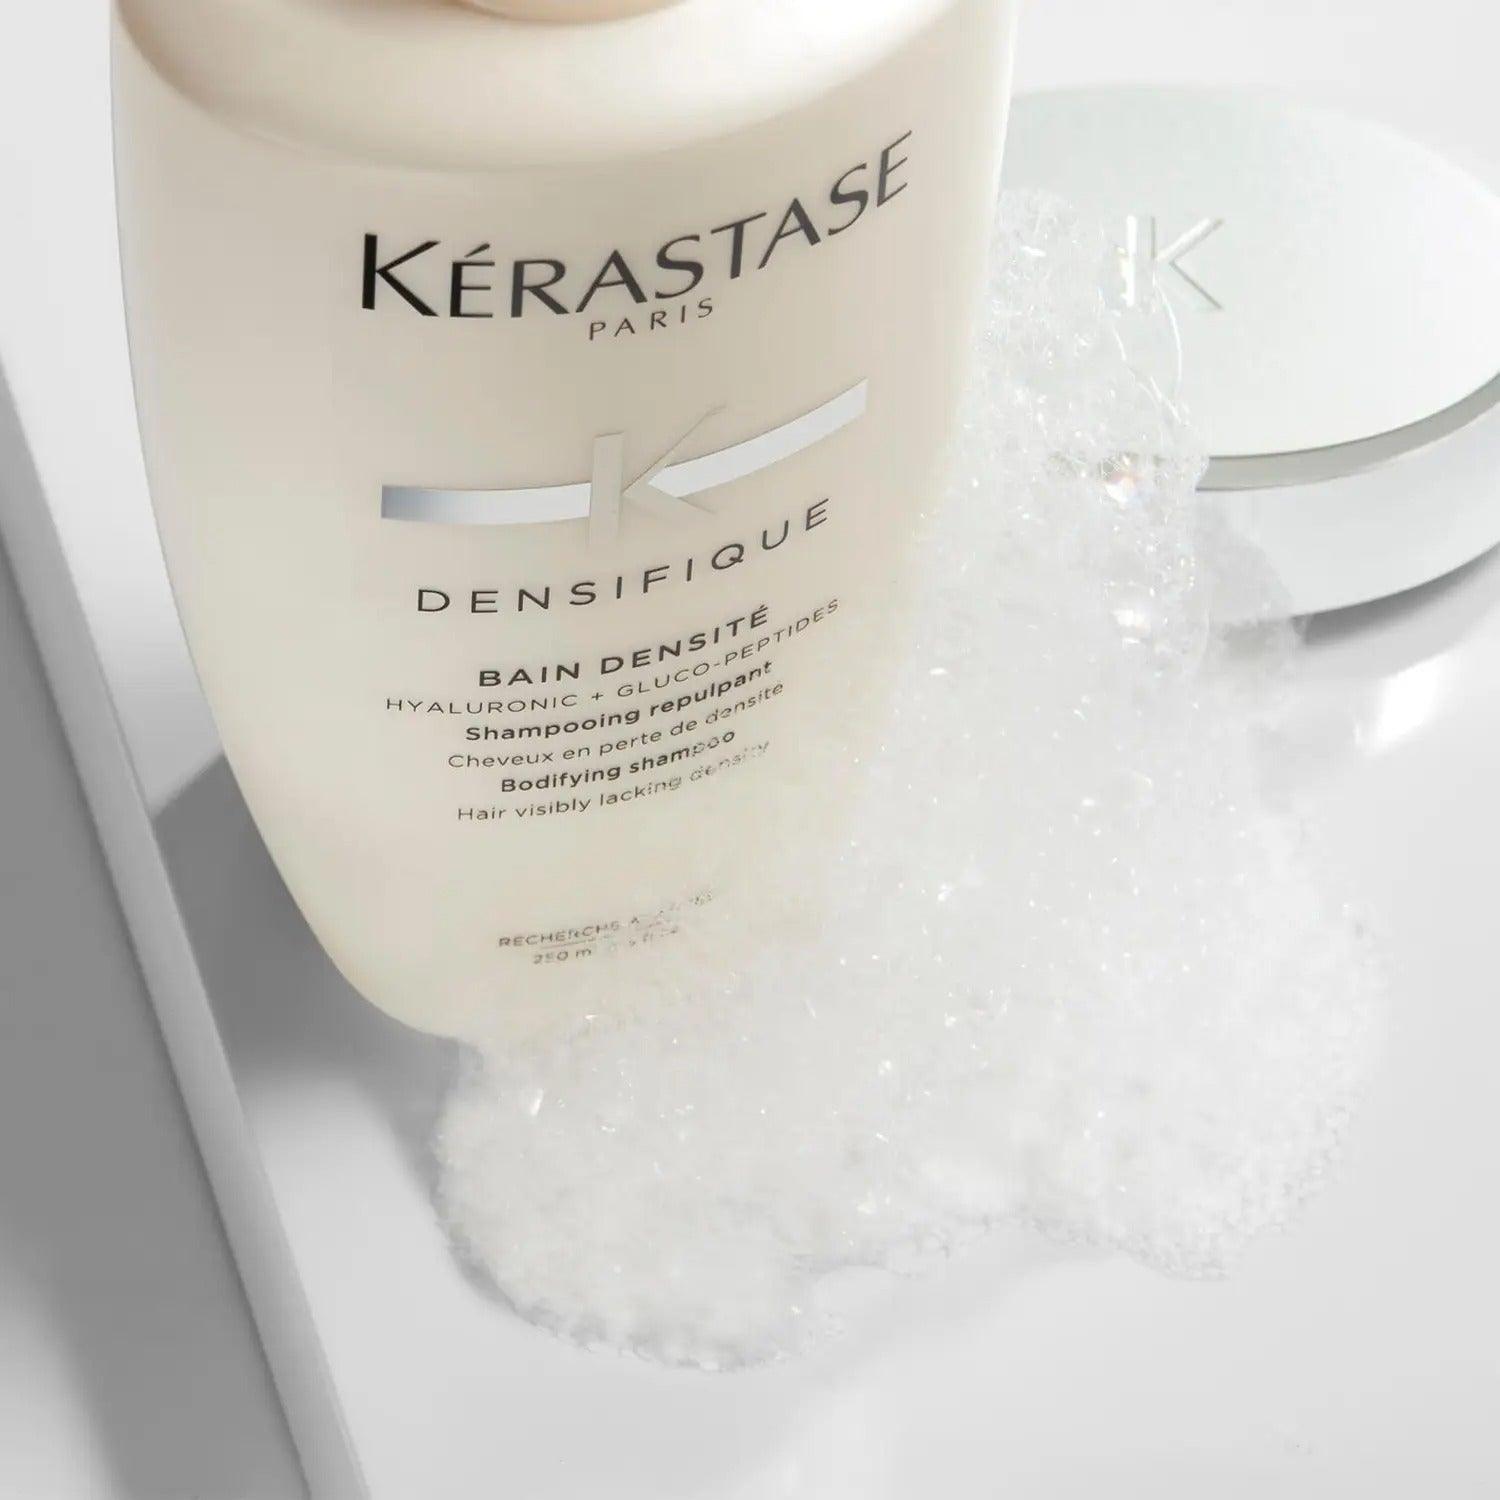 Kérastase Densifique Bain Densite Shampoo 250ml - Kerastase